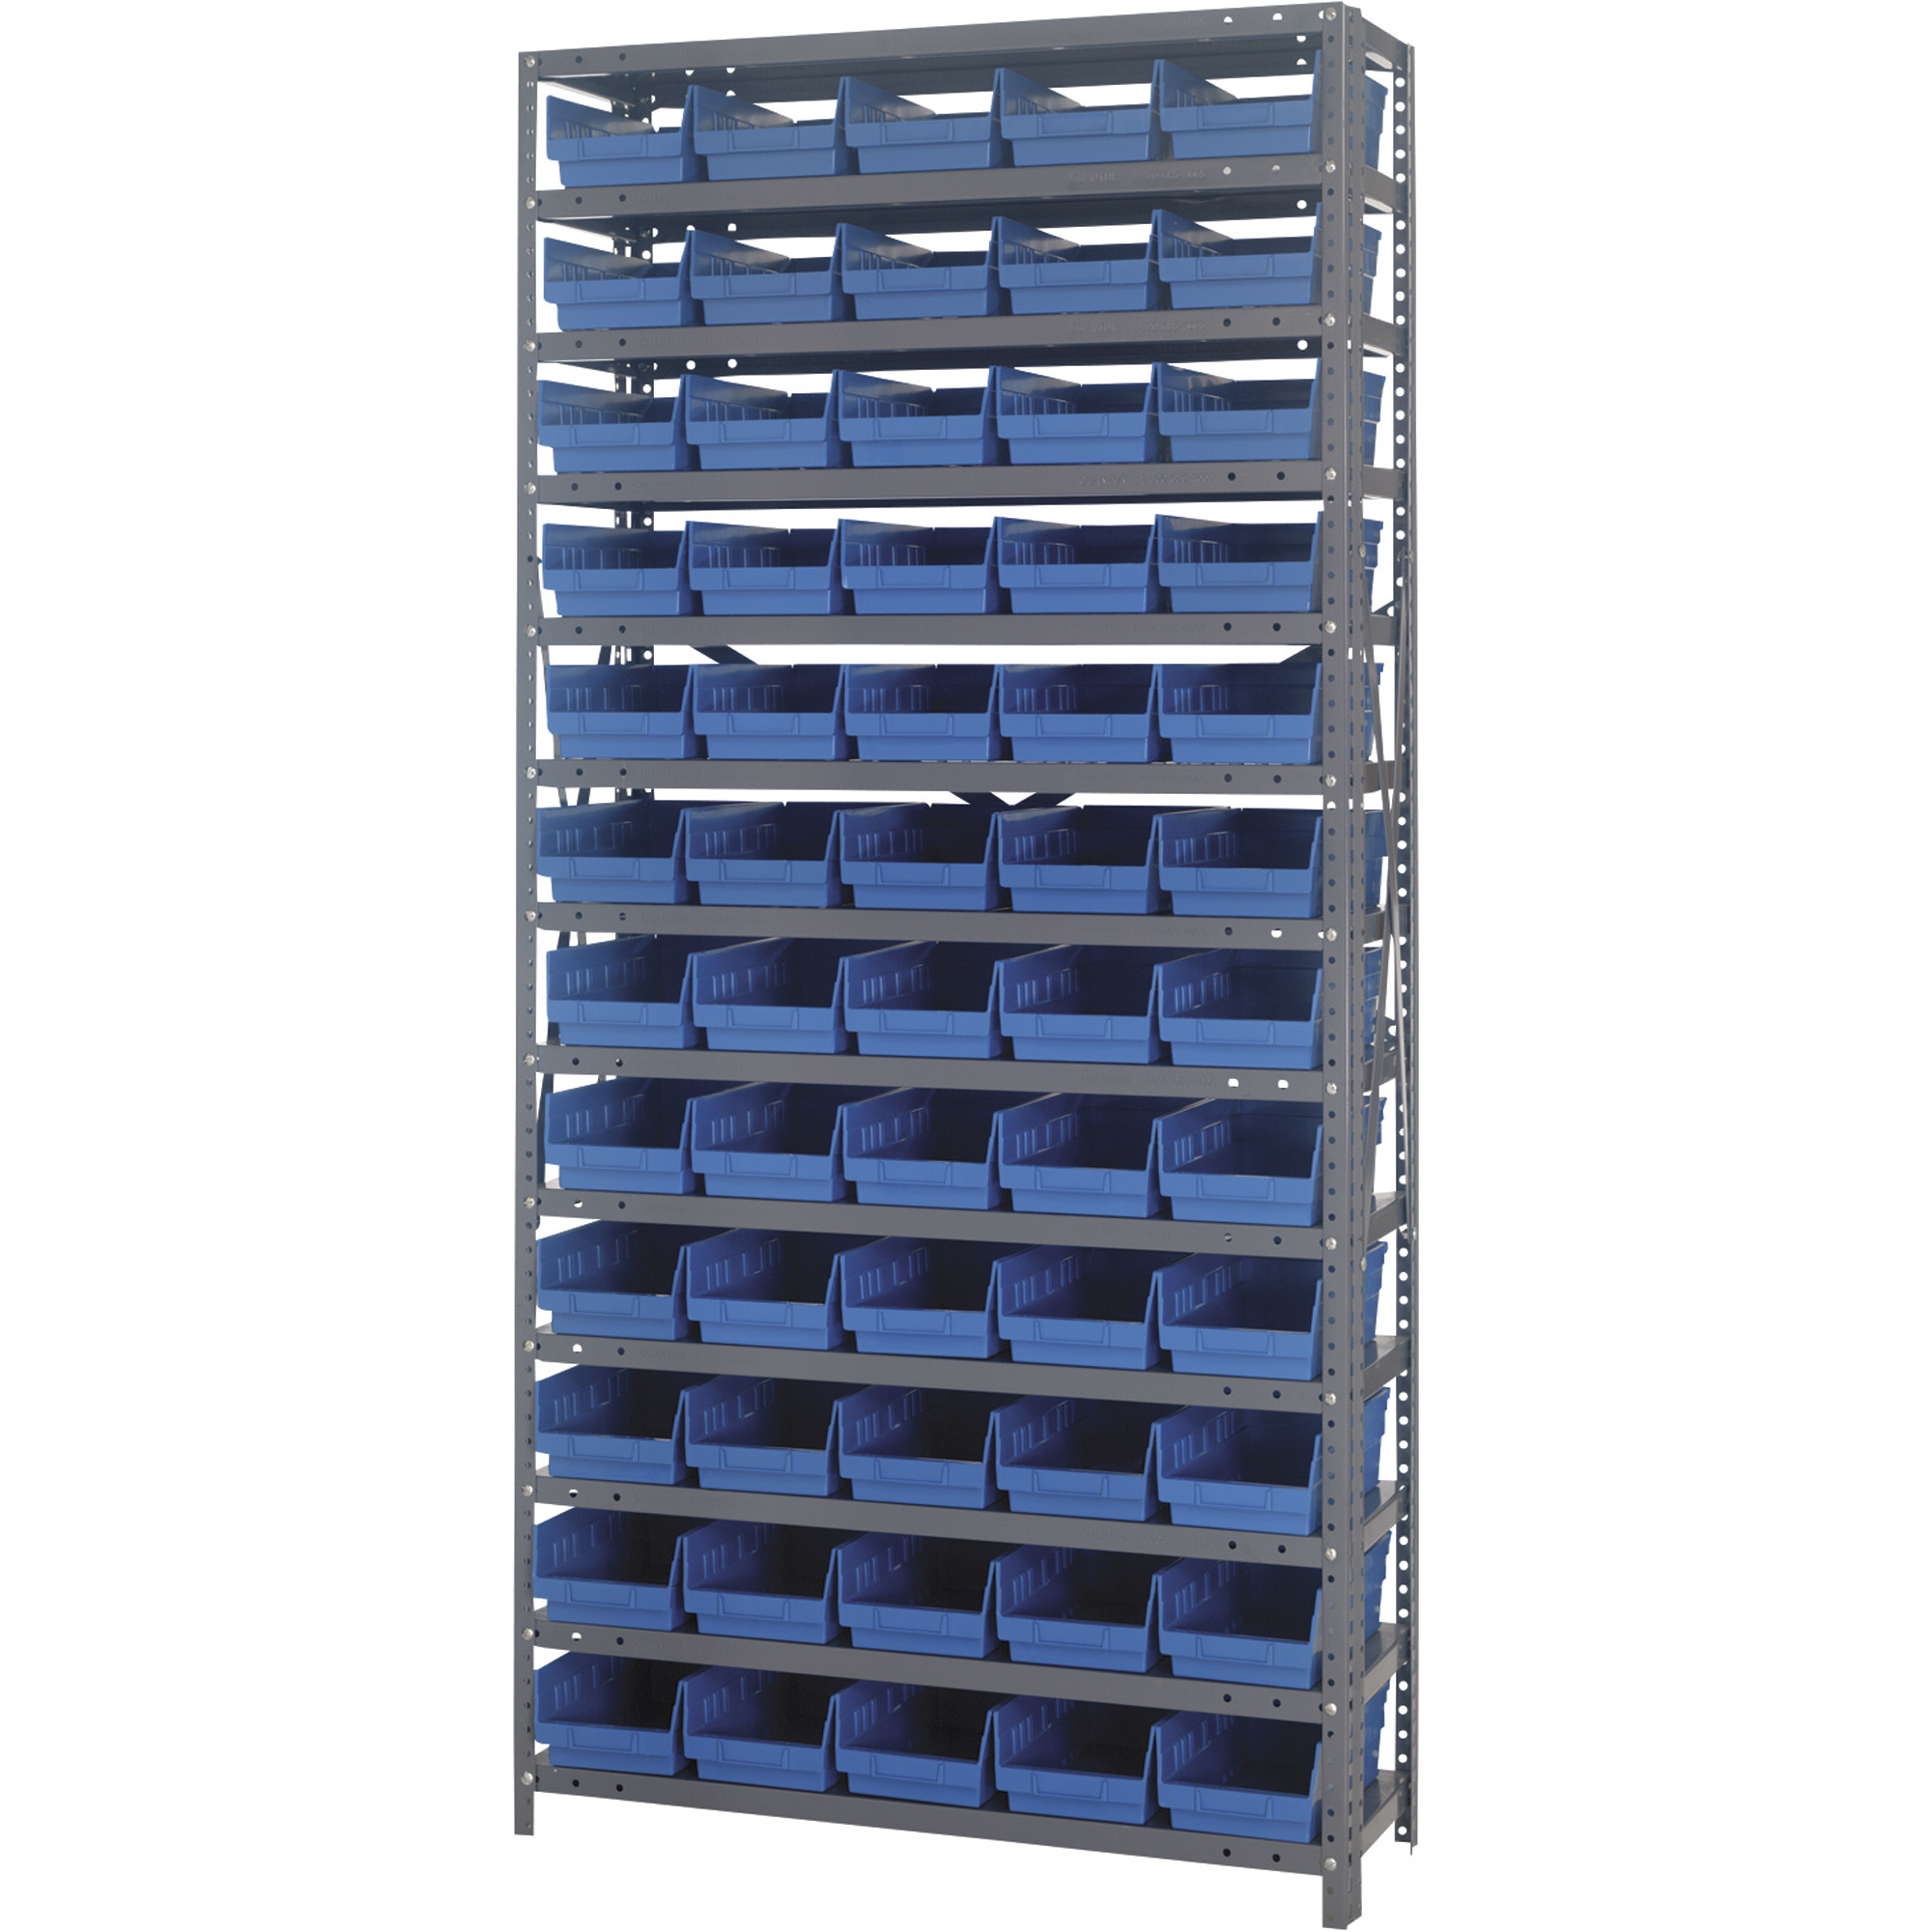 Quantum Storage Single Side Metal Shelving Unit With 60 Bins, 12Inch x 36Inch x 75Inch Rack Size, Blue, Model 1275-102BL